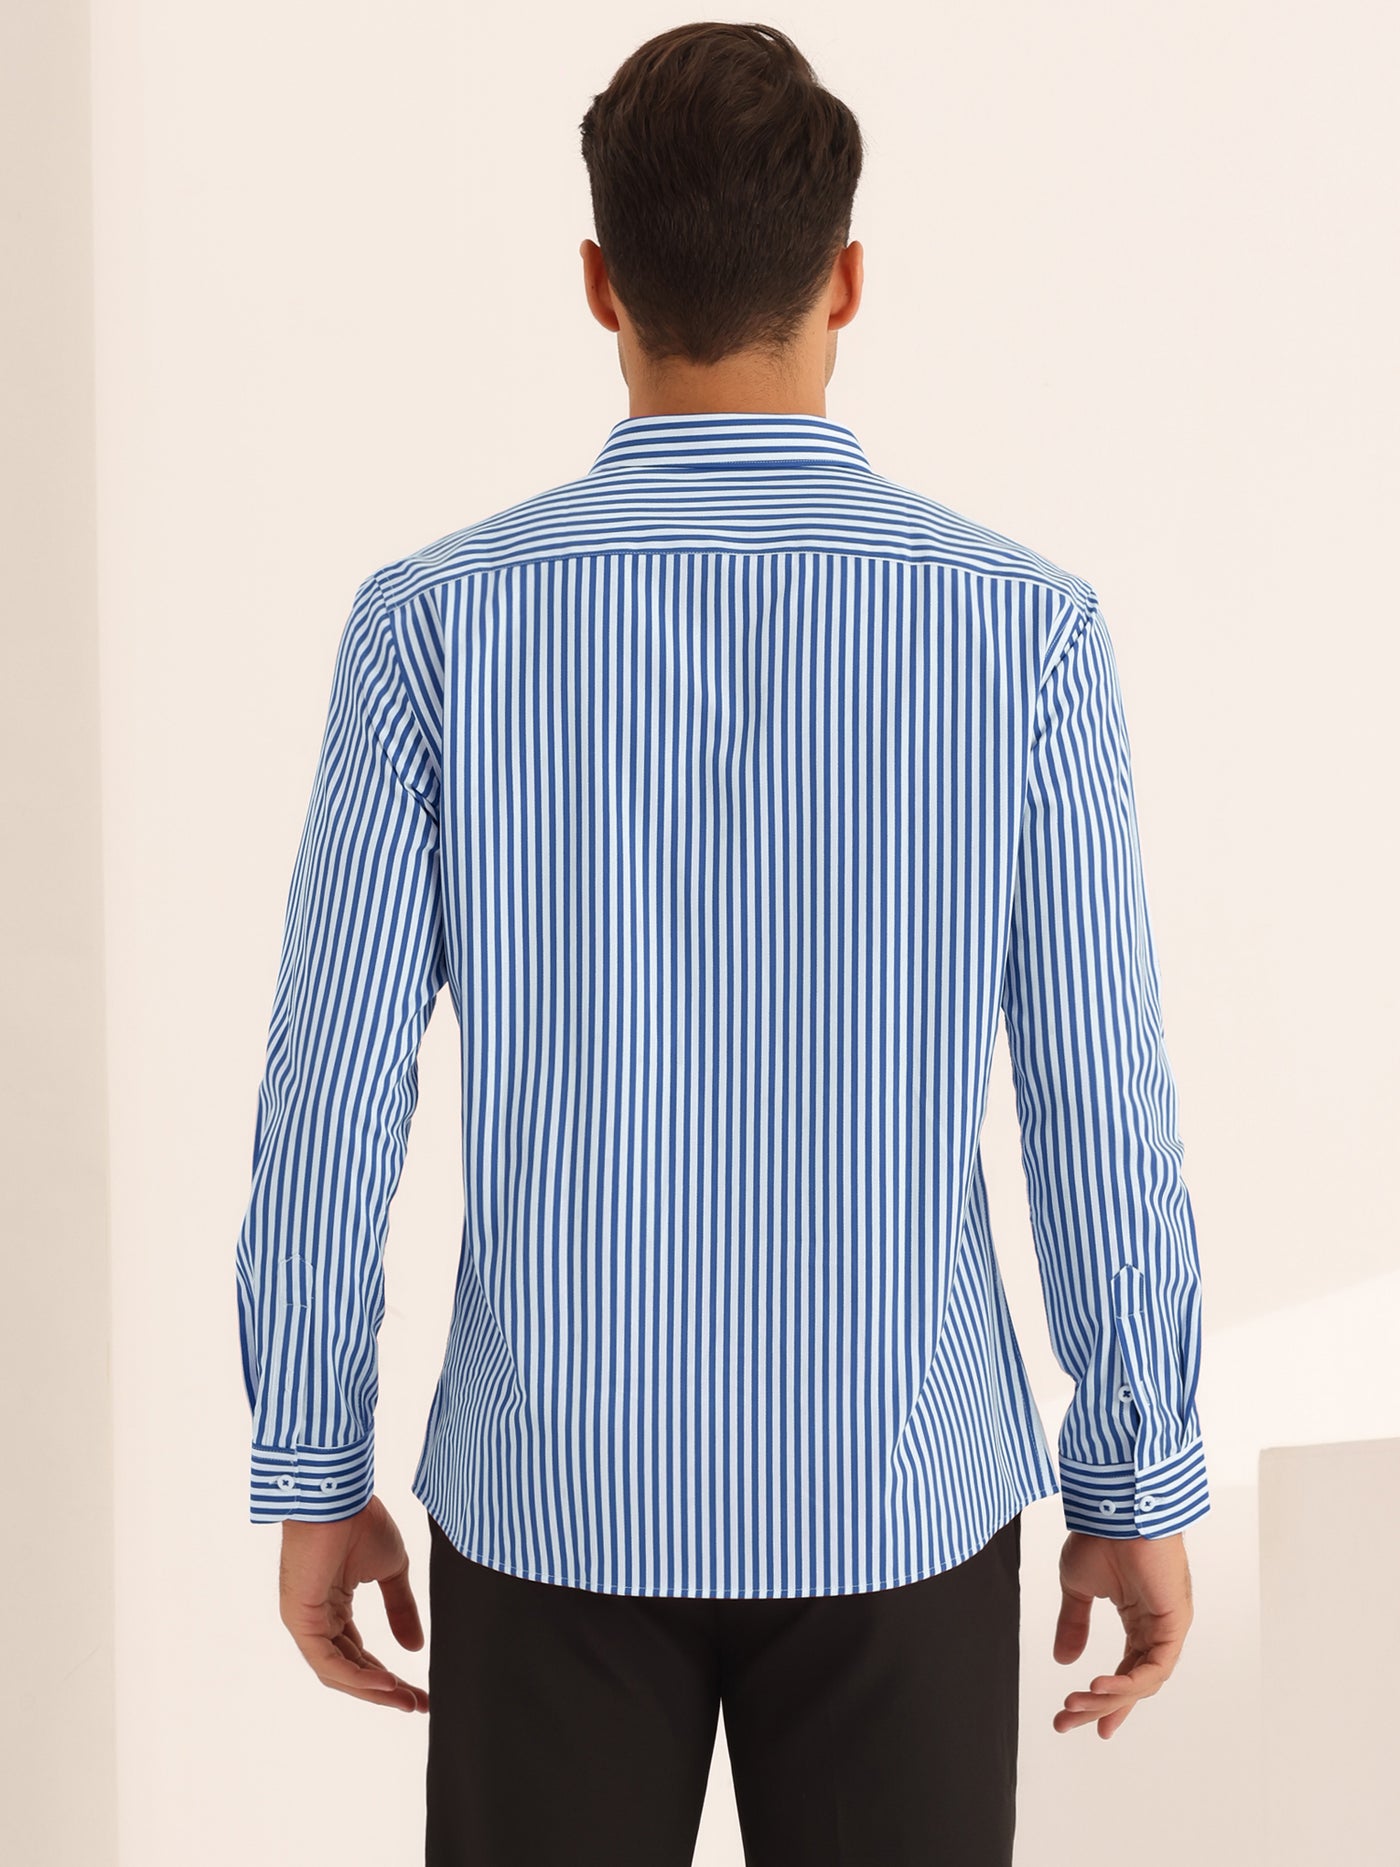 Bublédon Striped Dress Shirts for Men's Business Button Down Long Sleeve Stripes Shirt